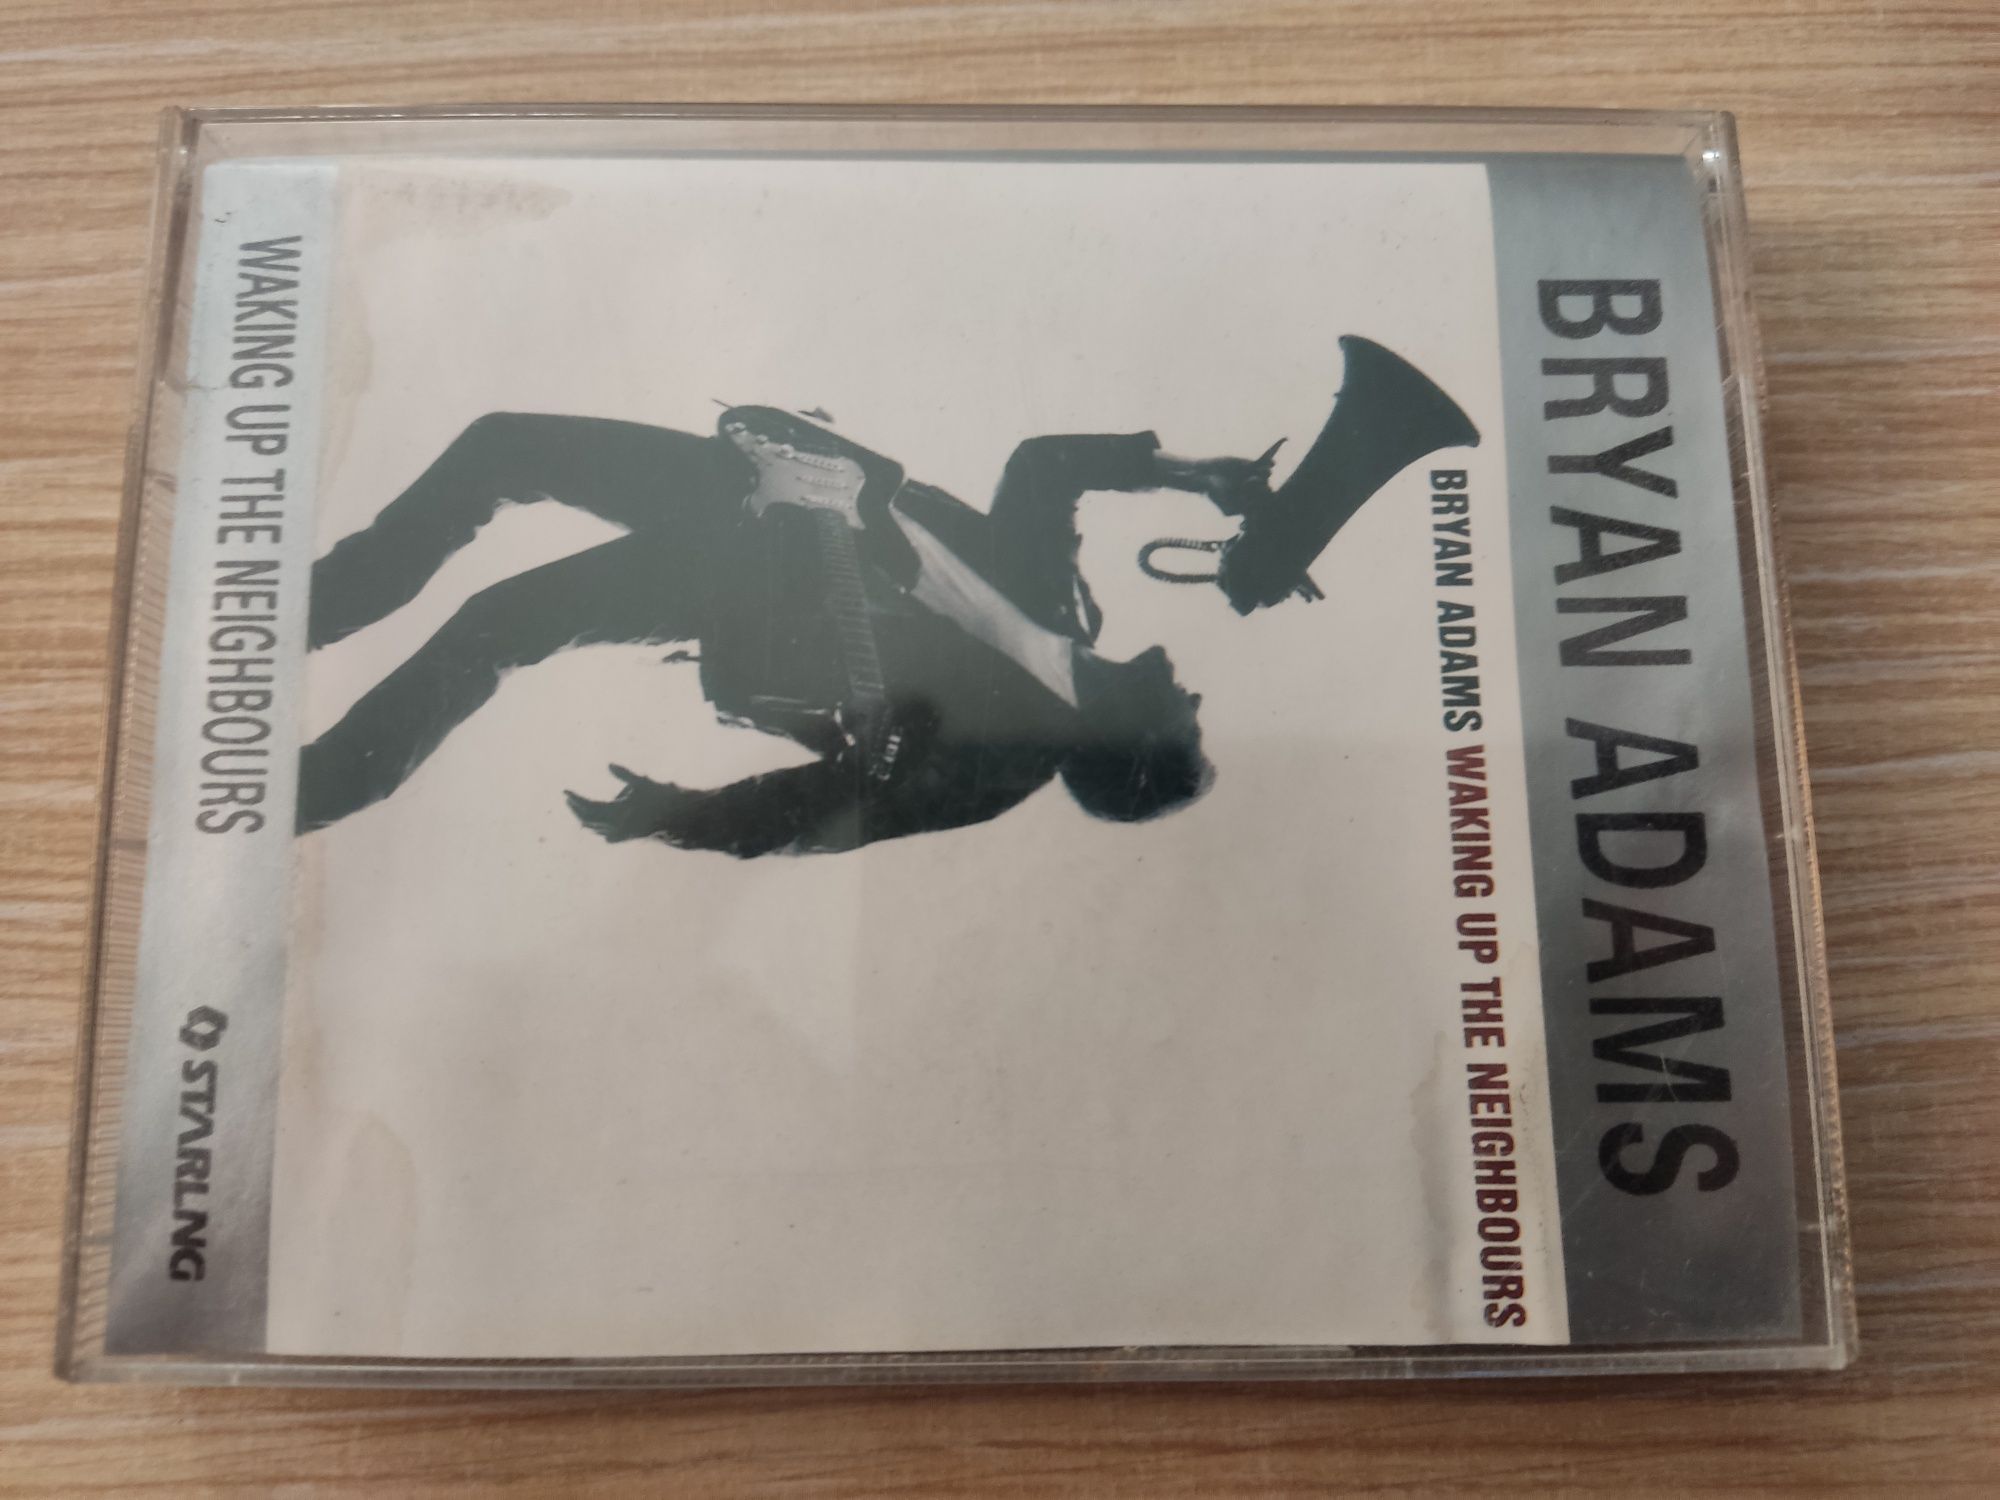 Bryan Adams, podwójna kaseta audio